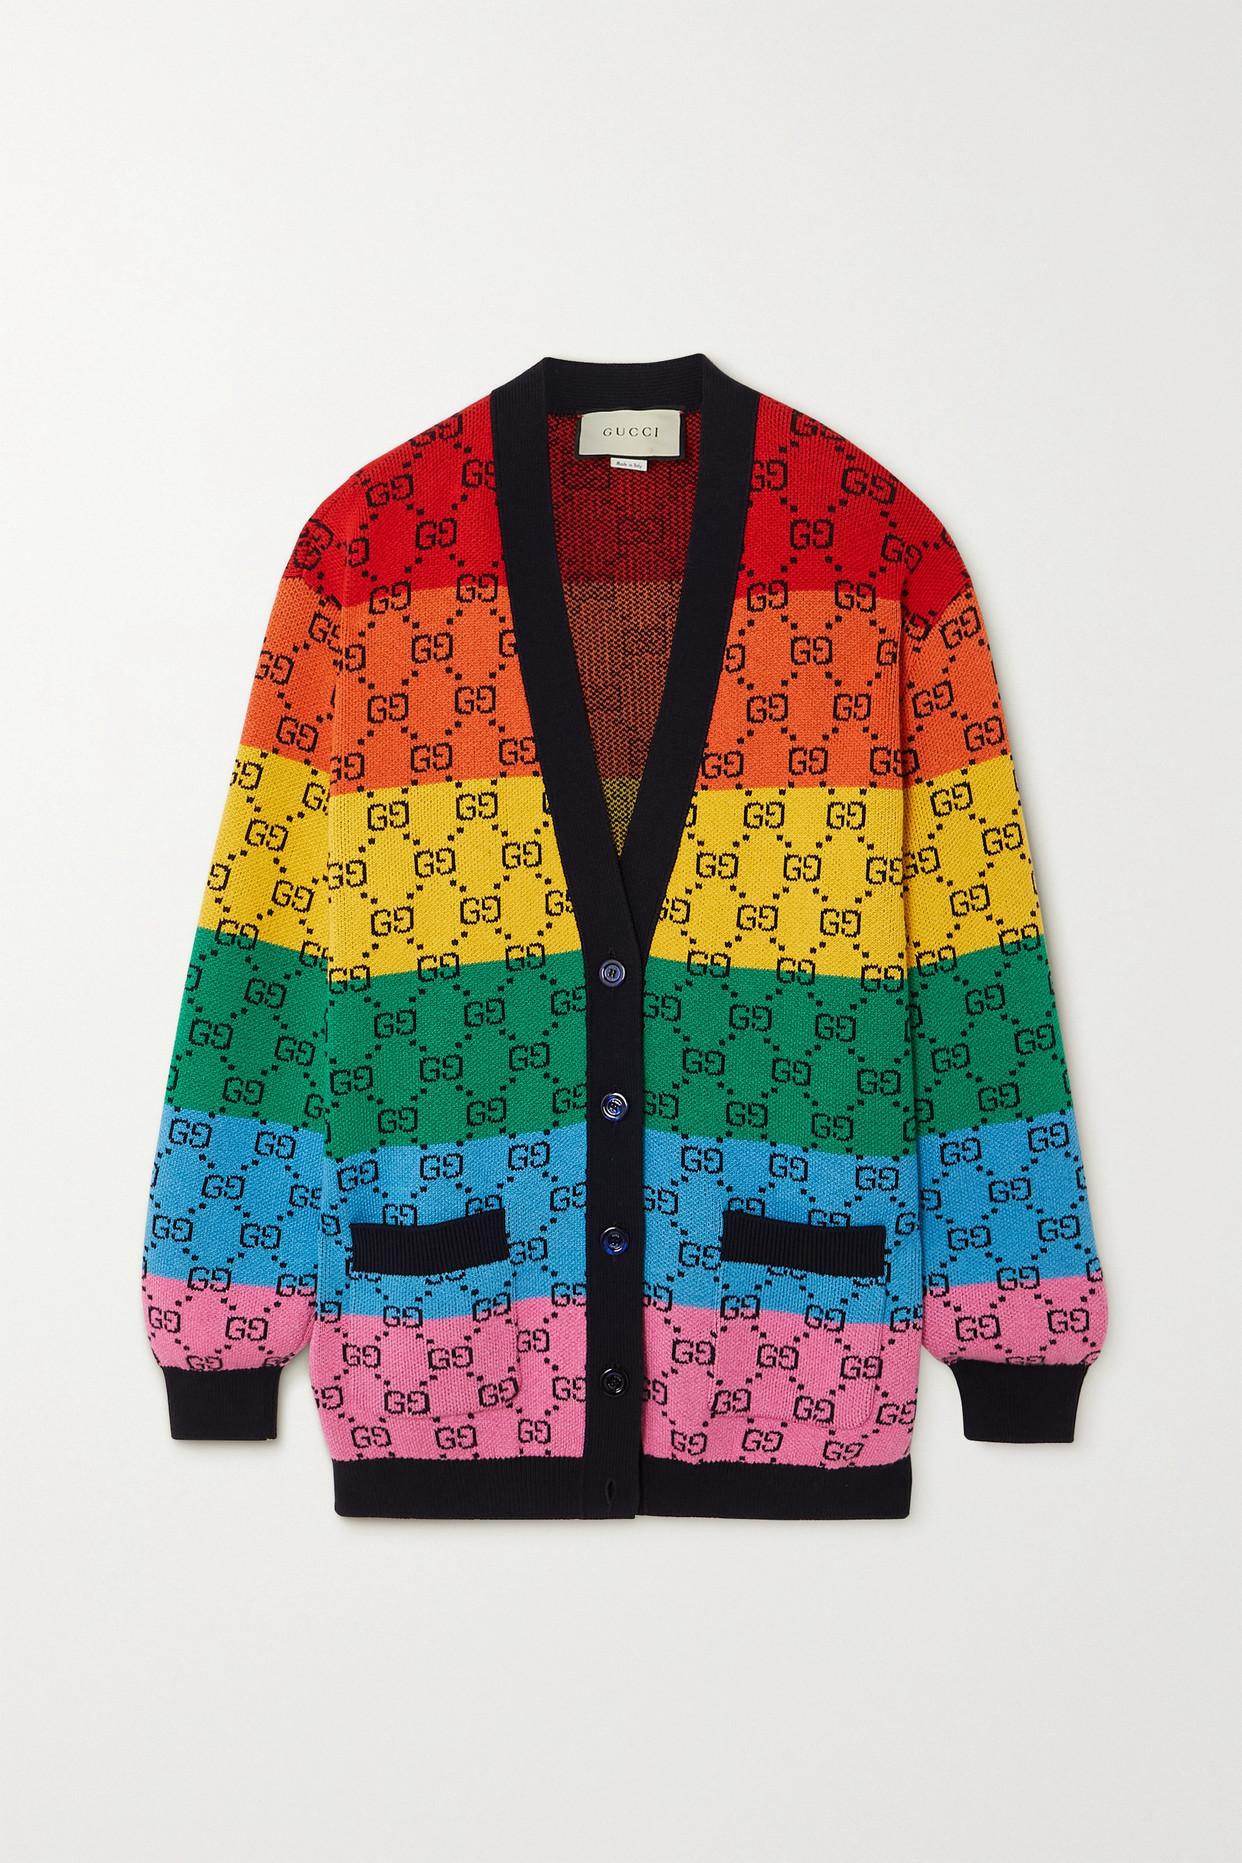 Gucci Gg Multicolour Striped Intarsia Wool-blend Cardigan | Lyst